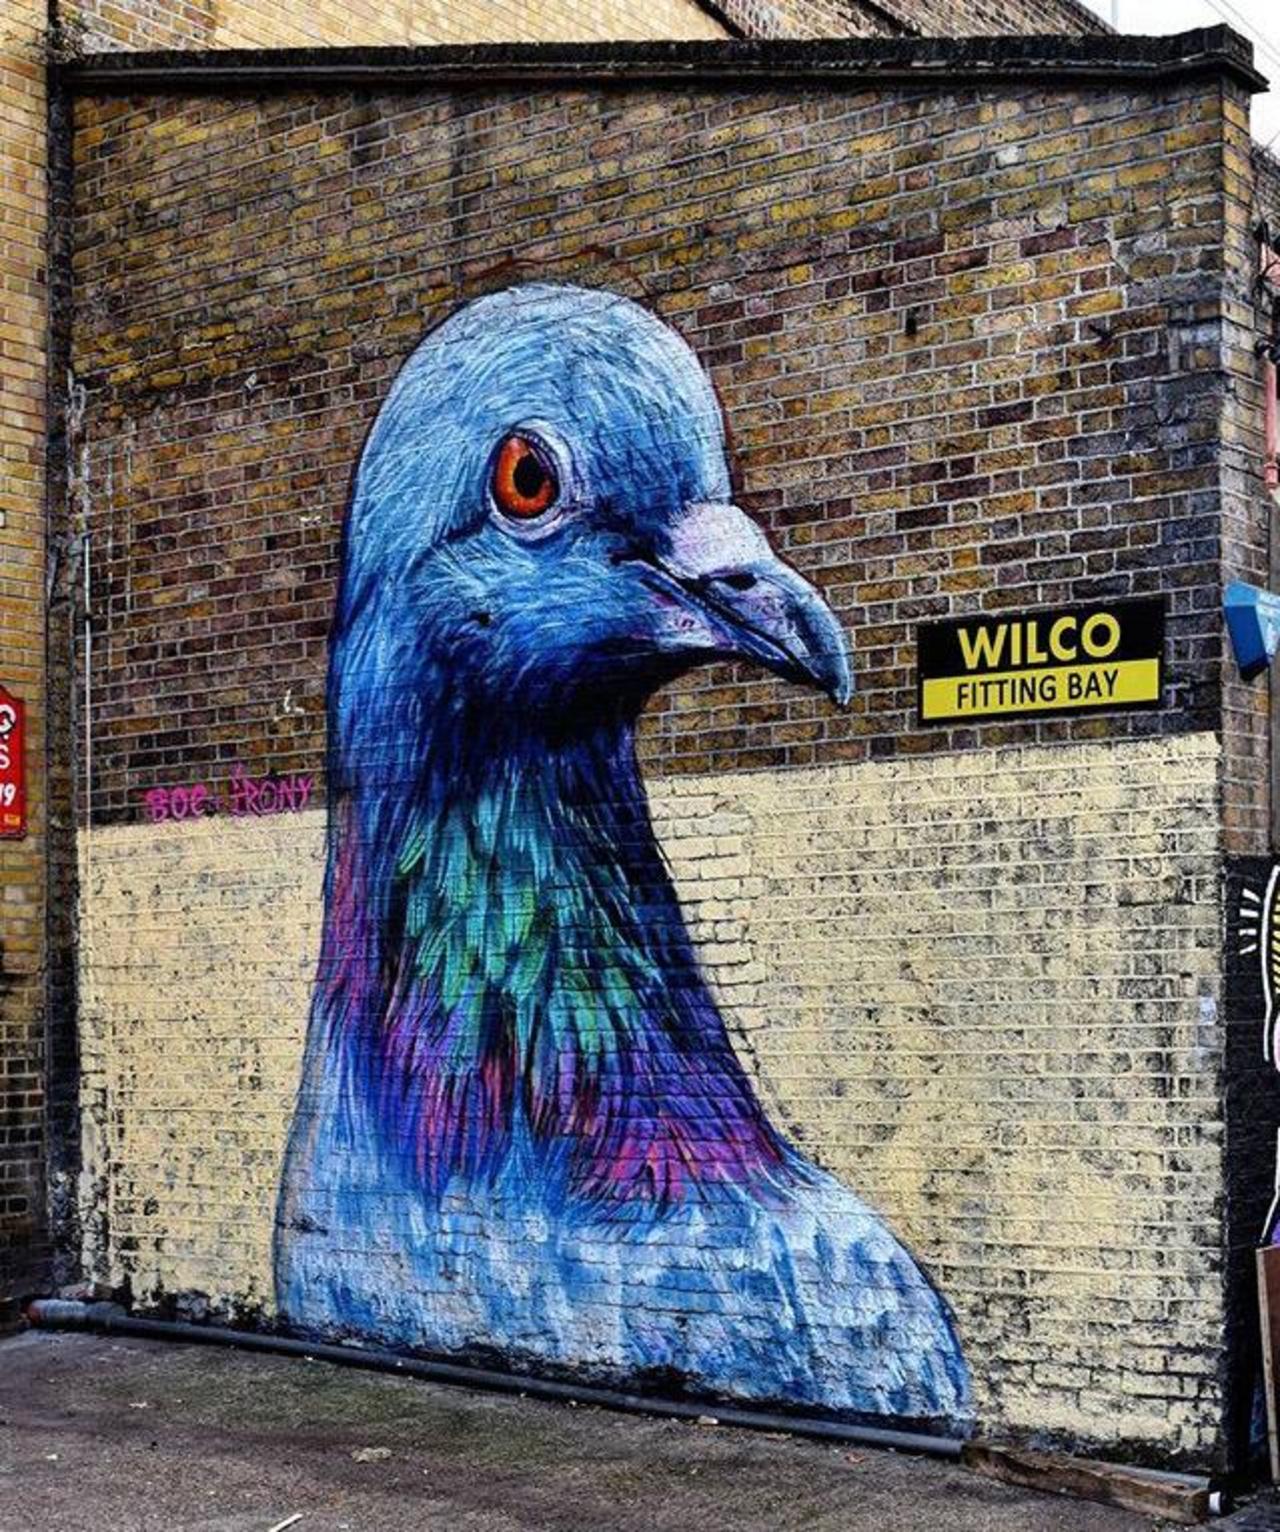 Street Art by Placee Boe & whoamirony in London 

#art #graffiti #mural #streetart http://t.co/xrzzJwFQ25 … … … … http://twitter.com/GoogleStreetArt/status/652357036542414848/photo/1/large?utm_source=fb&utm_medium=fb&utm_campaign=charlesjackso14&utm_content=652360880609472512